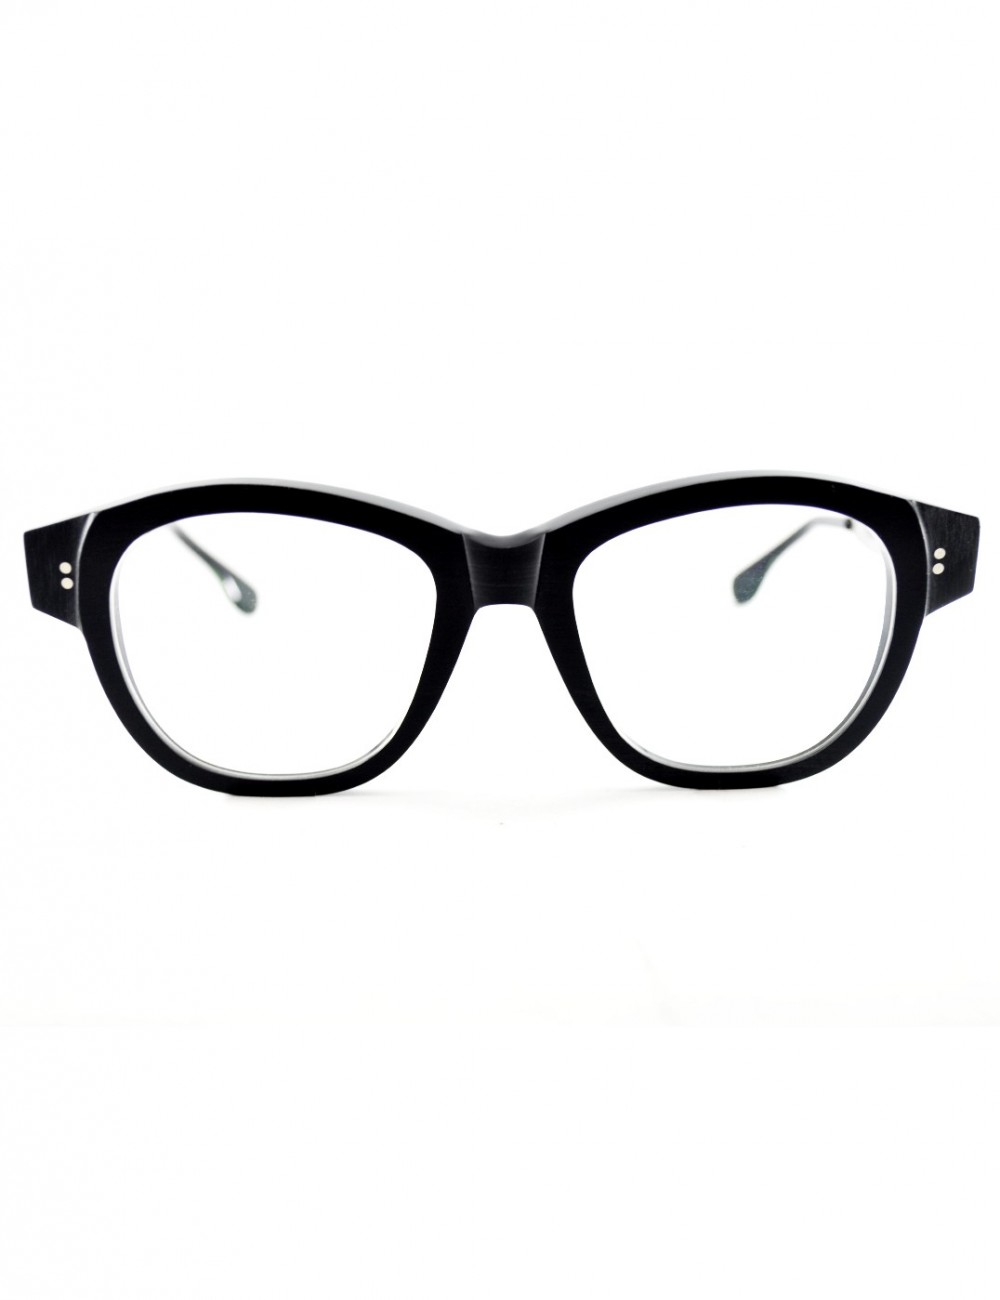 Rapp Rapp Massimo blk Shop Online Brillen